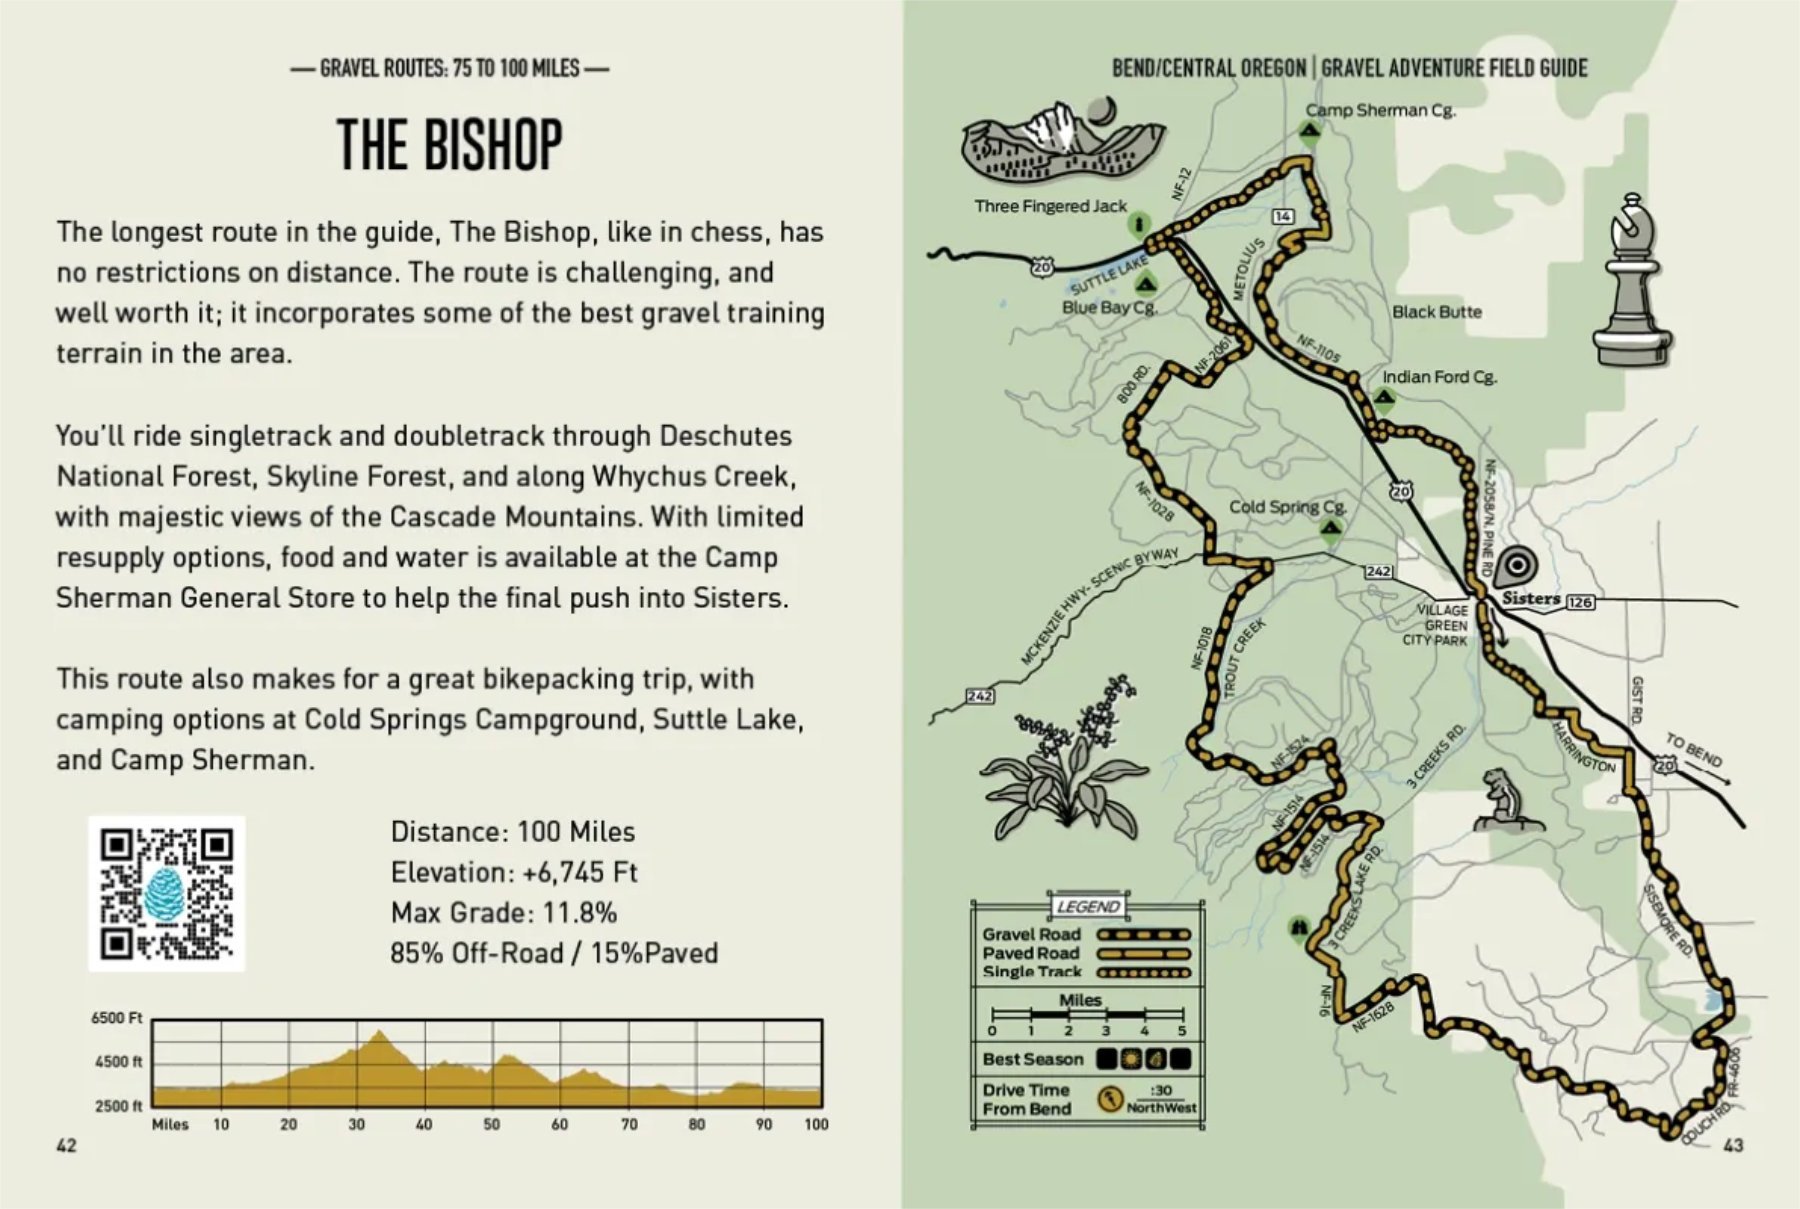 Gravel Adventure Field Guide Routes